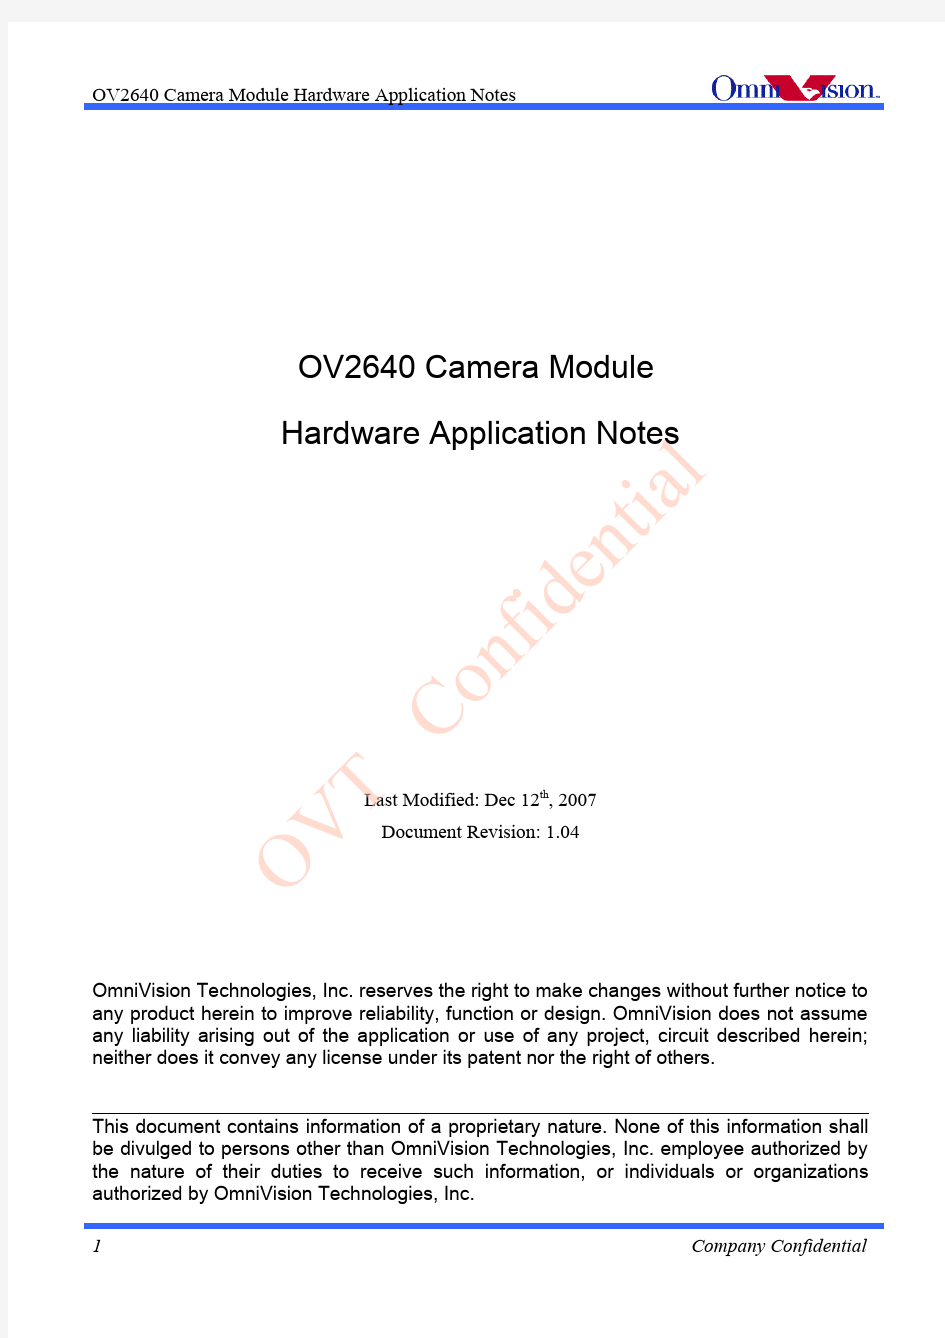 OV2640 Camera Module Hardware Application Notes1.04